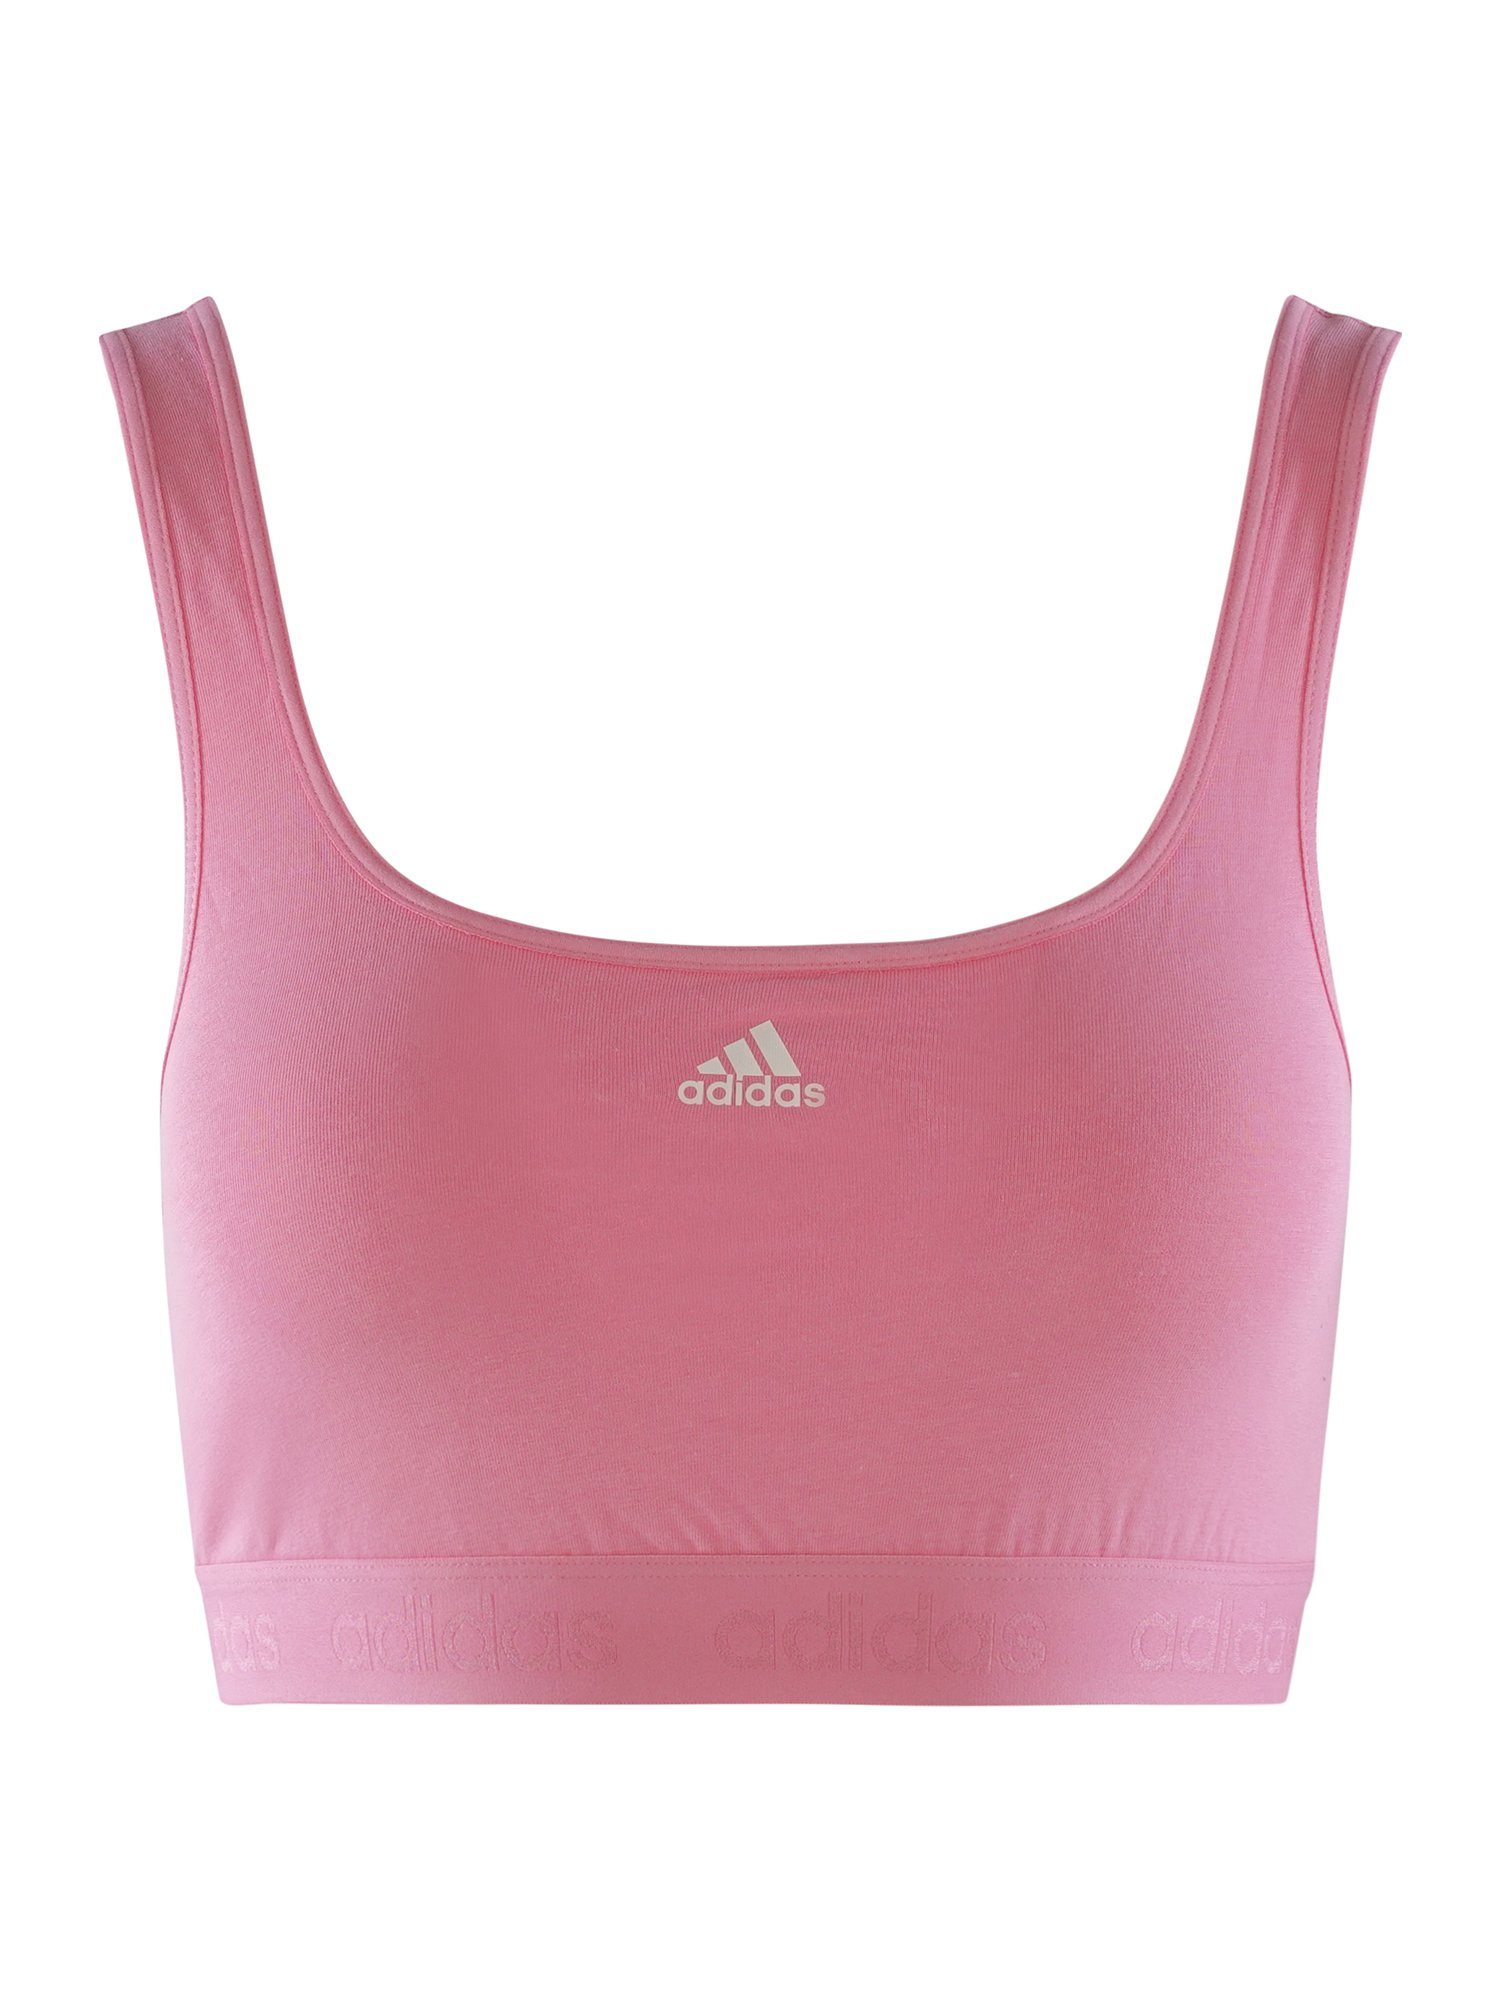 Sportswear BRA sachet adidas pink Bustier CROP